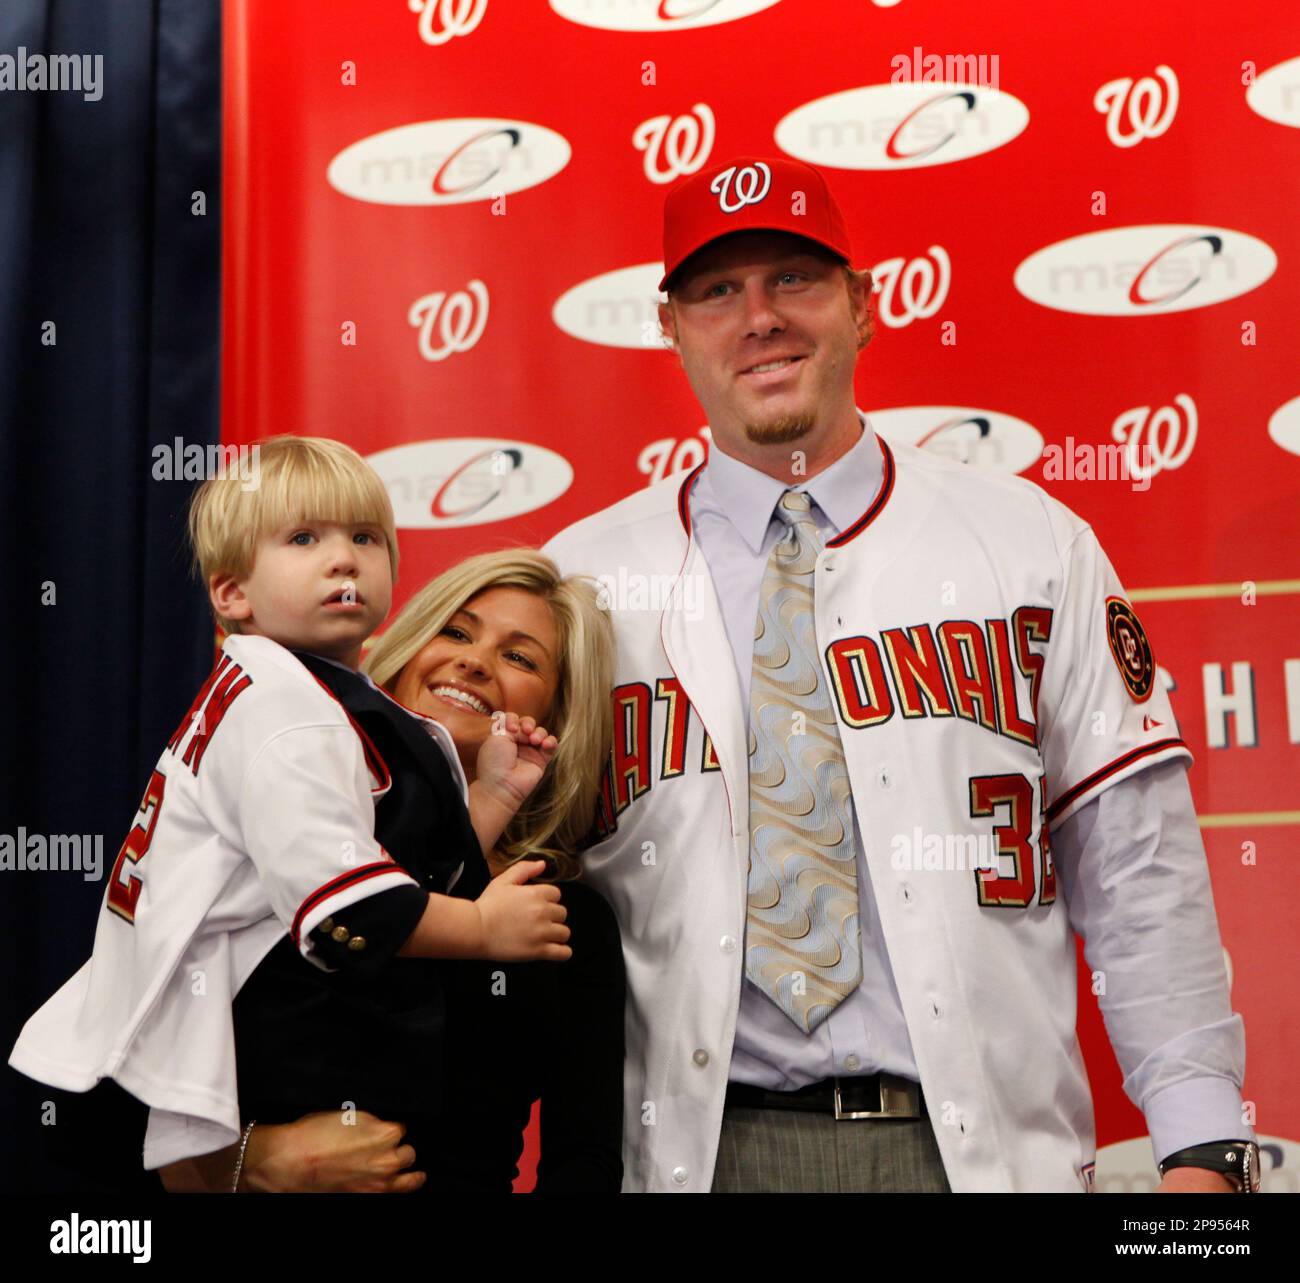 Washington Nationals baseball player Adam Dunn poses with his wife